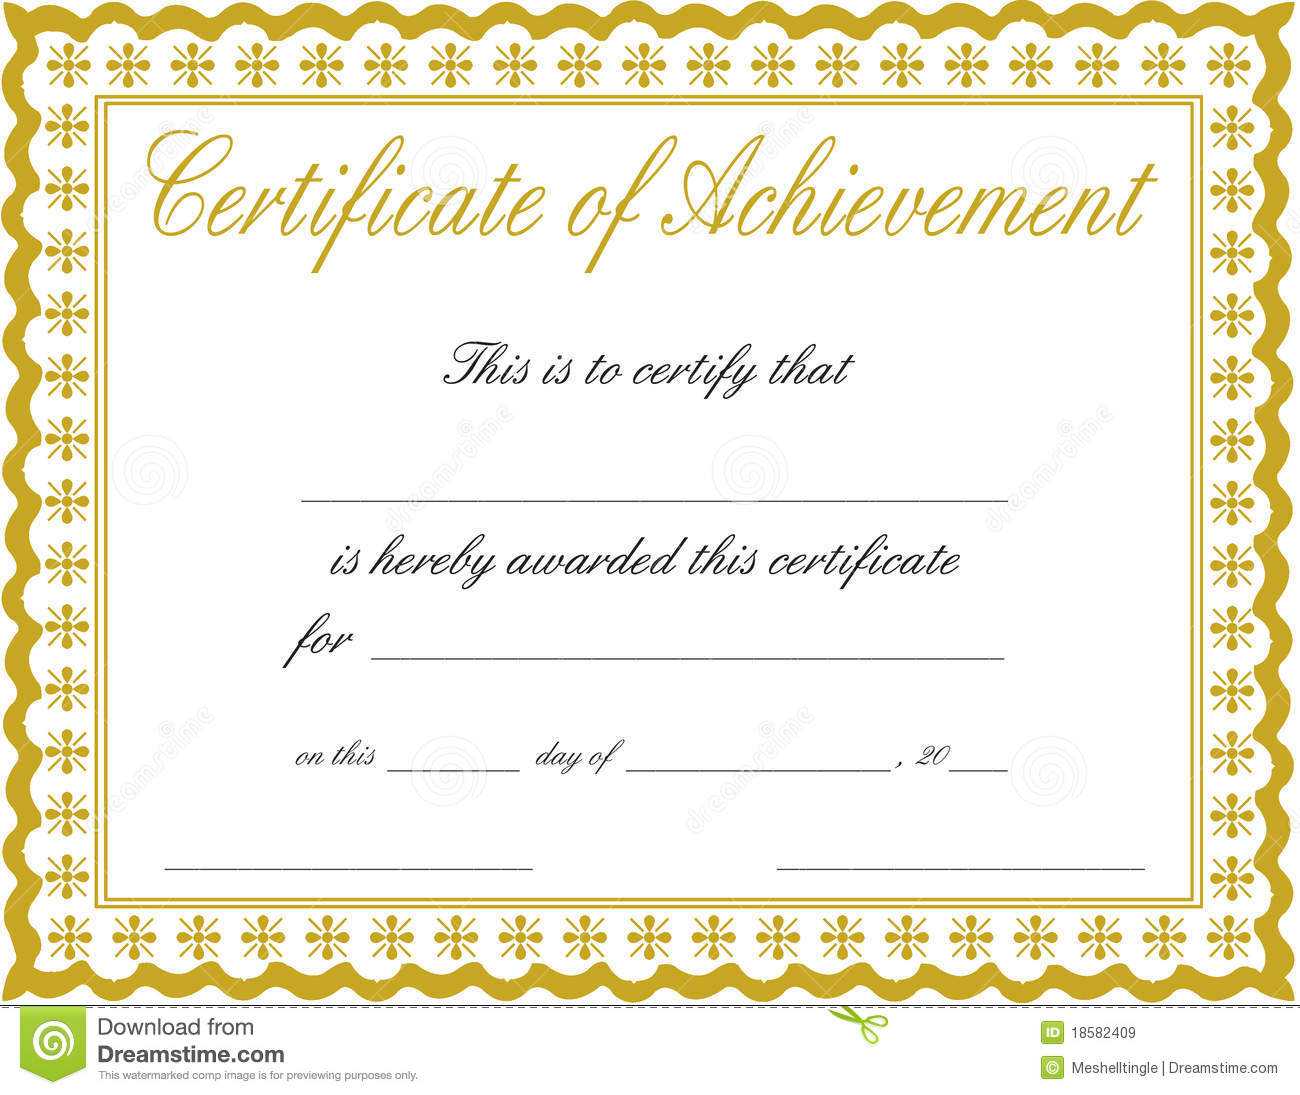 Docx Achievement Certificates Templates Free Certificate Of With Blank Certificate Of Achievement Template